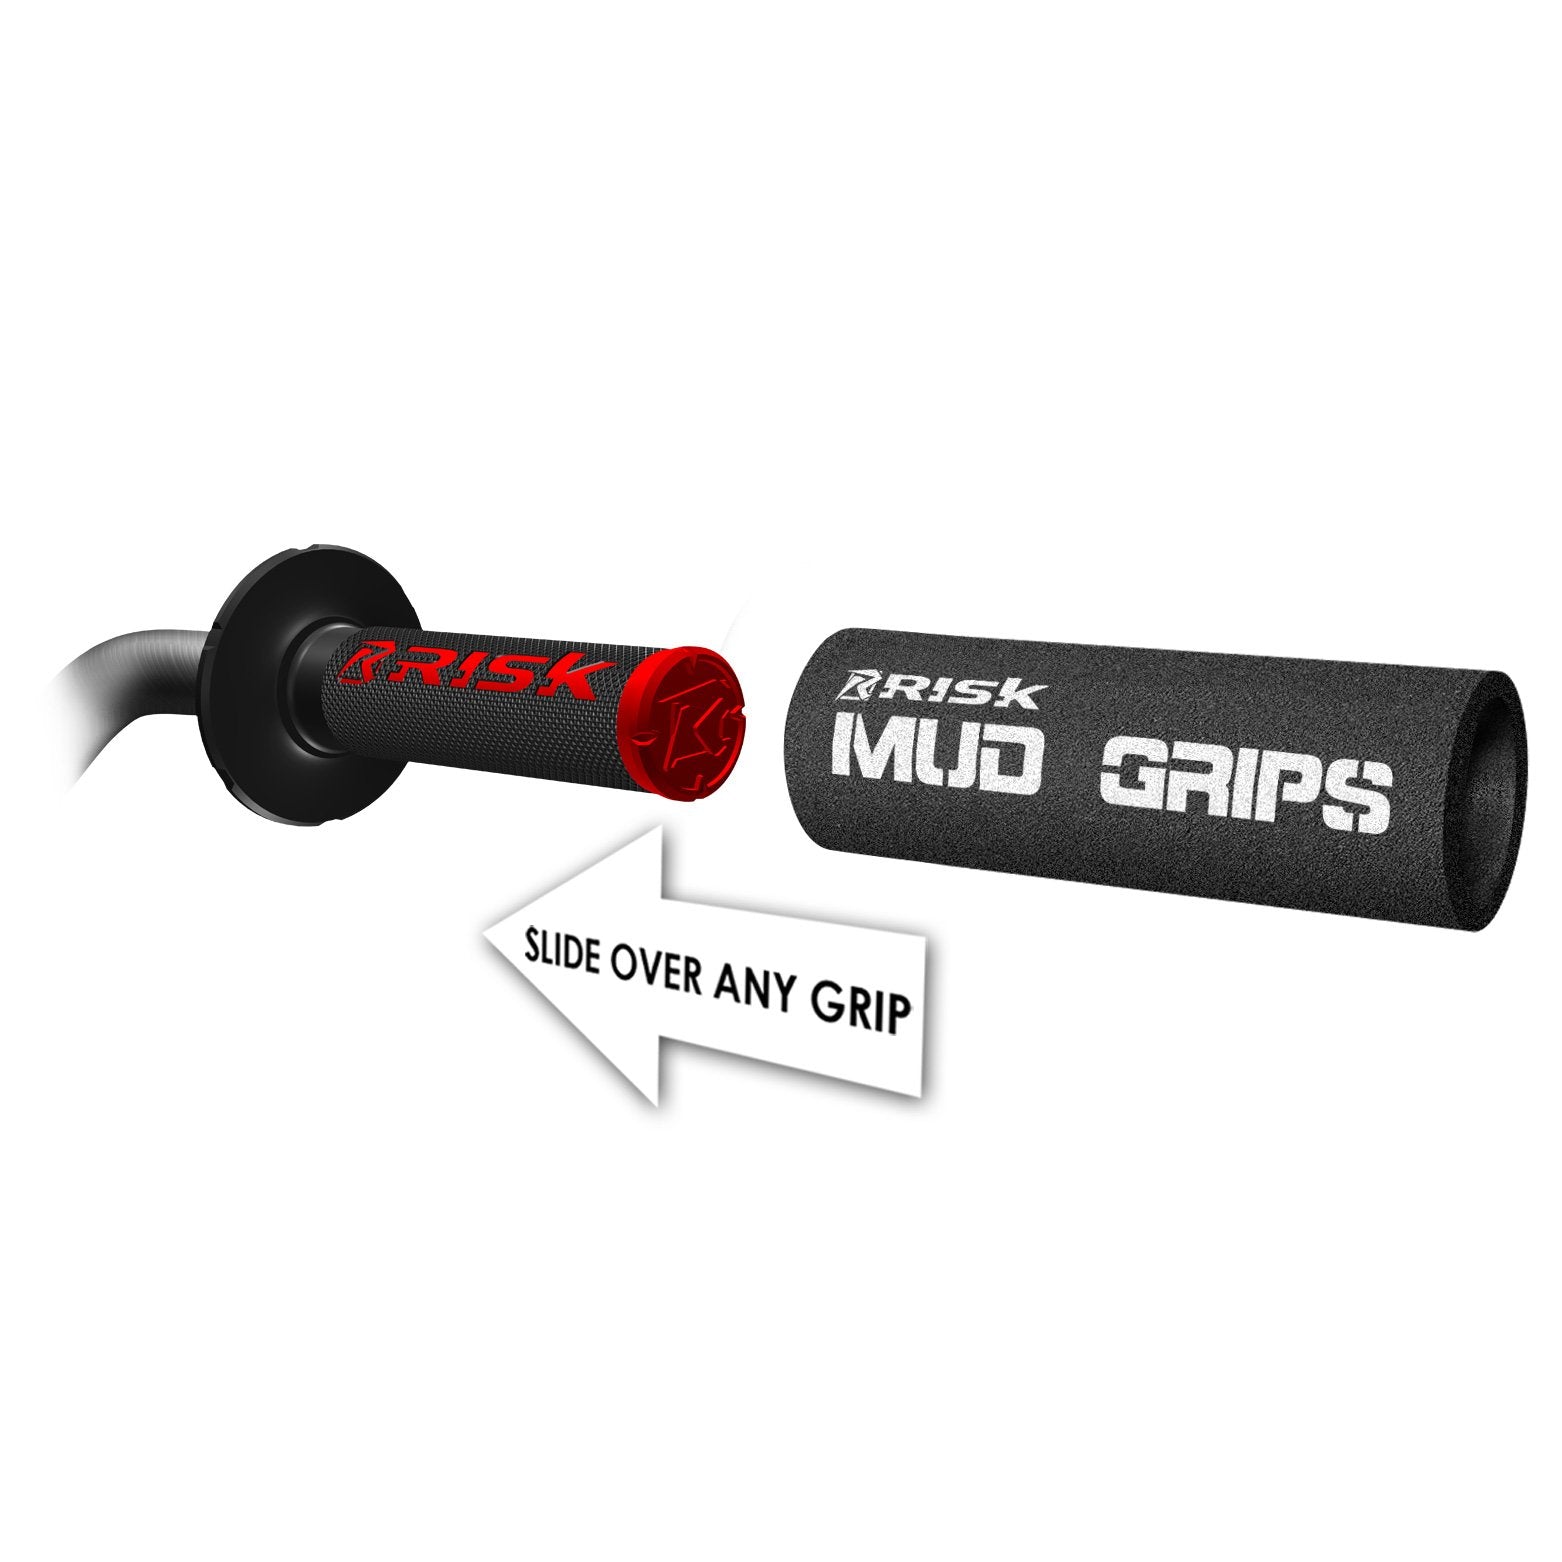 Mud Grips - Risk Racing